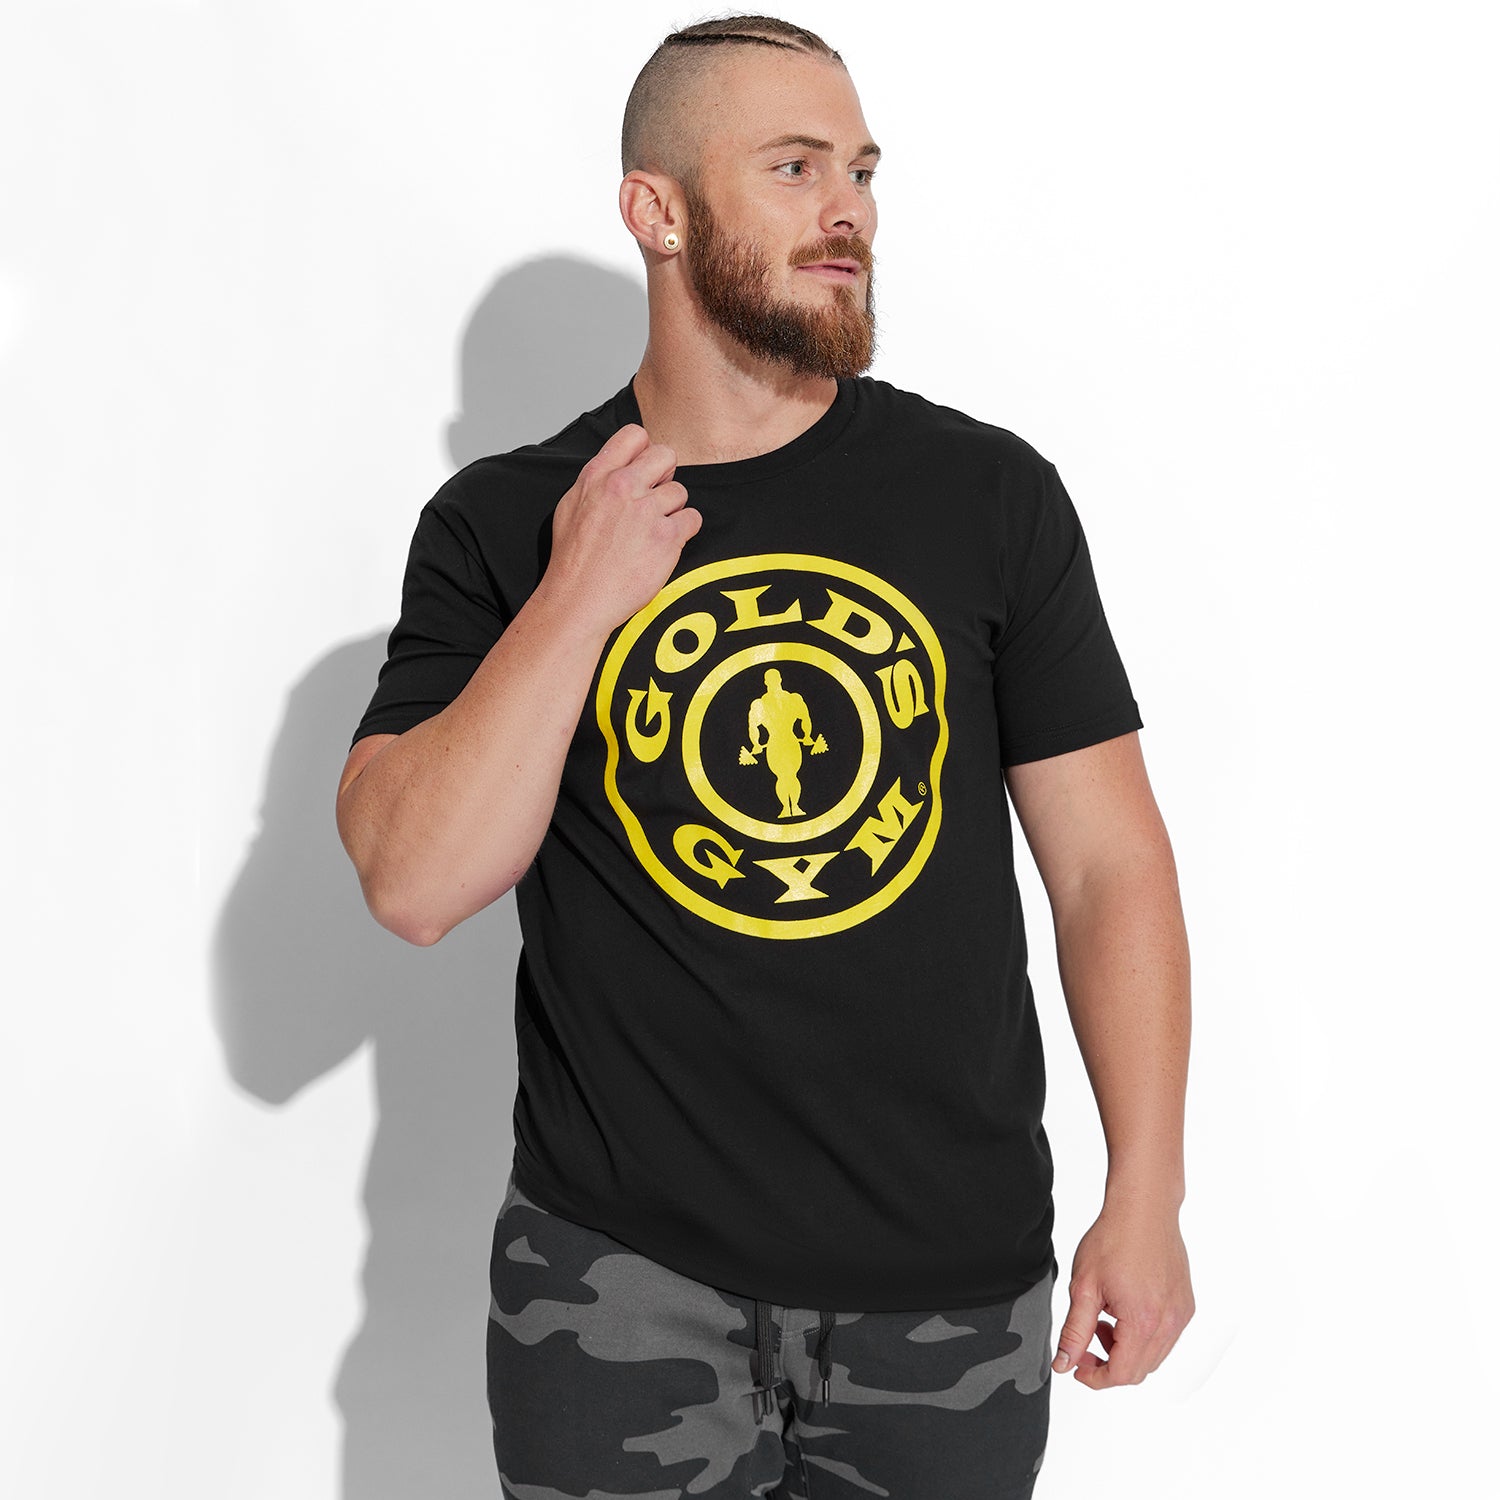 Gold's Gym T-Shirt - Official Licensed - BT-1